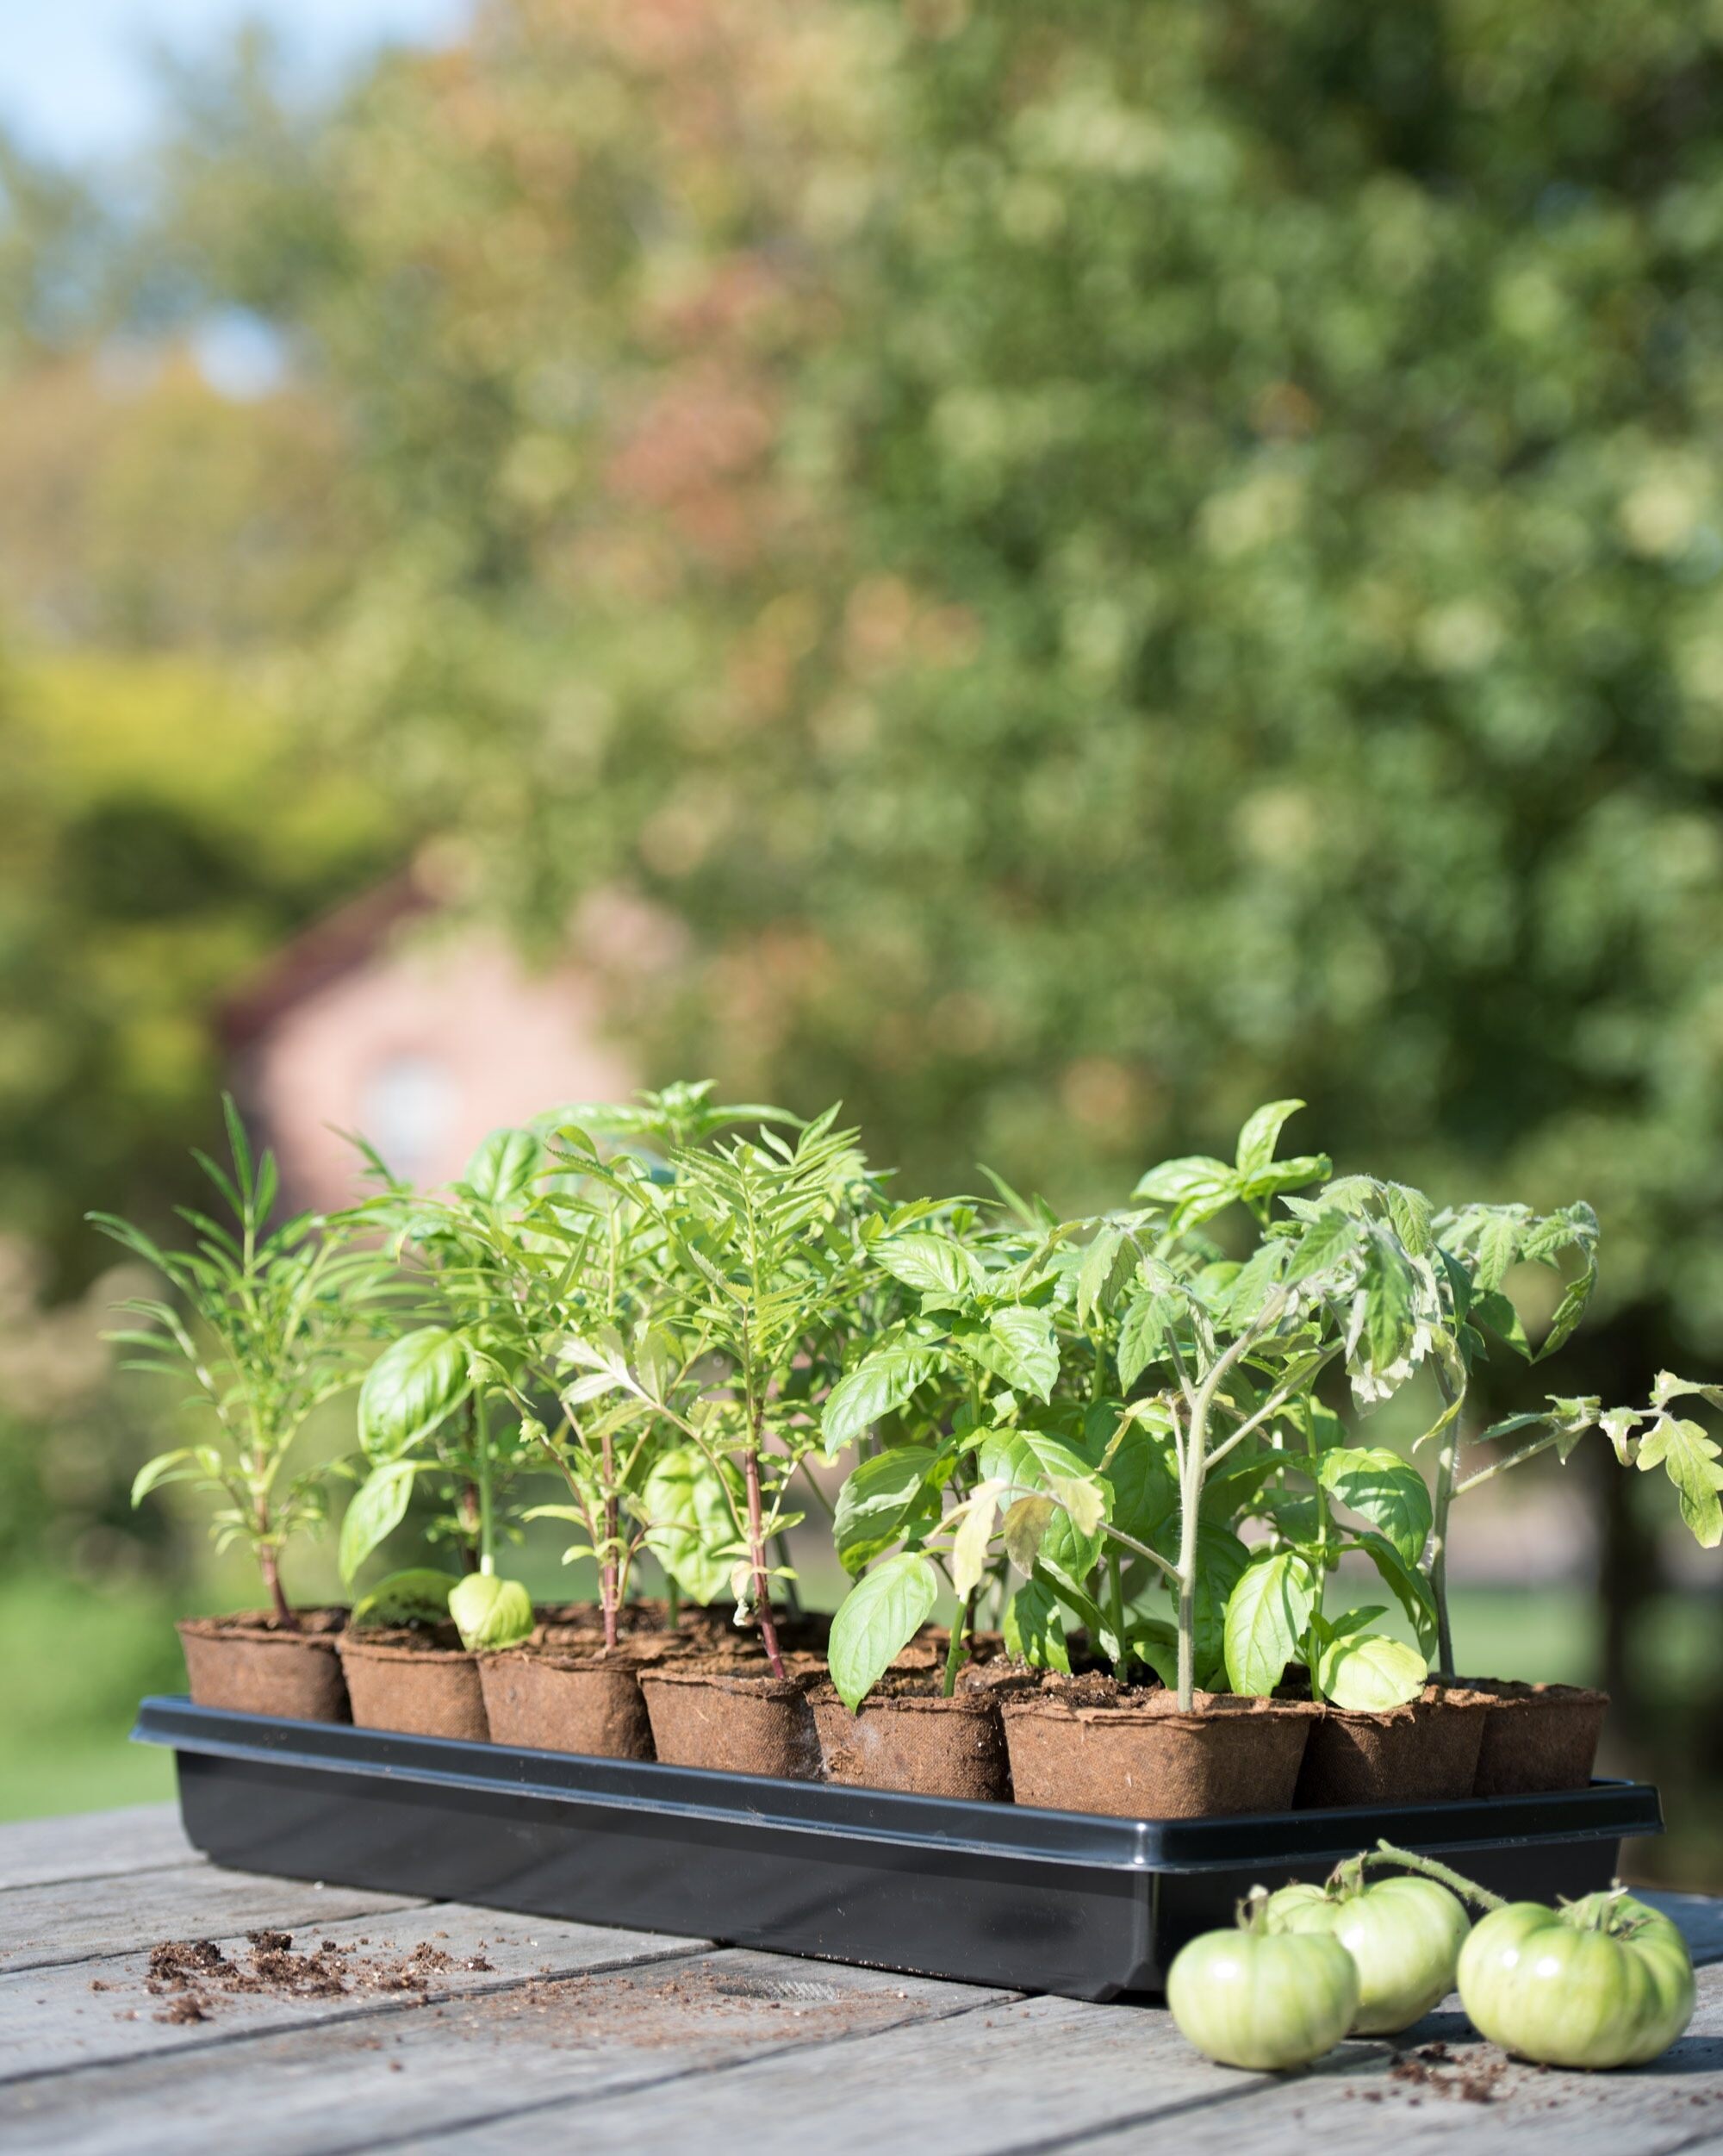 Pack of 5 Garden Gear Biodegradable Organic Coir Seed Trays